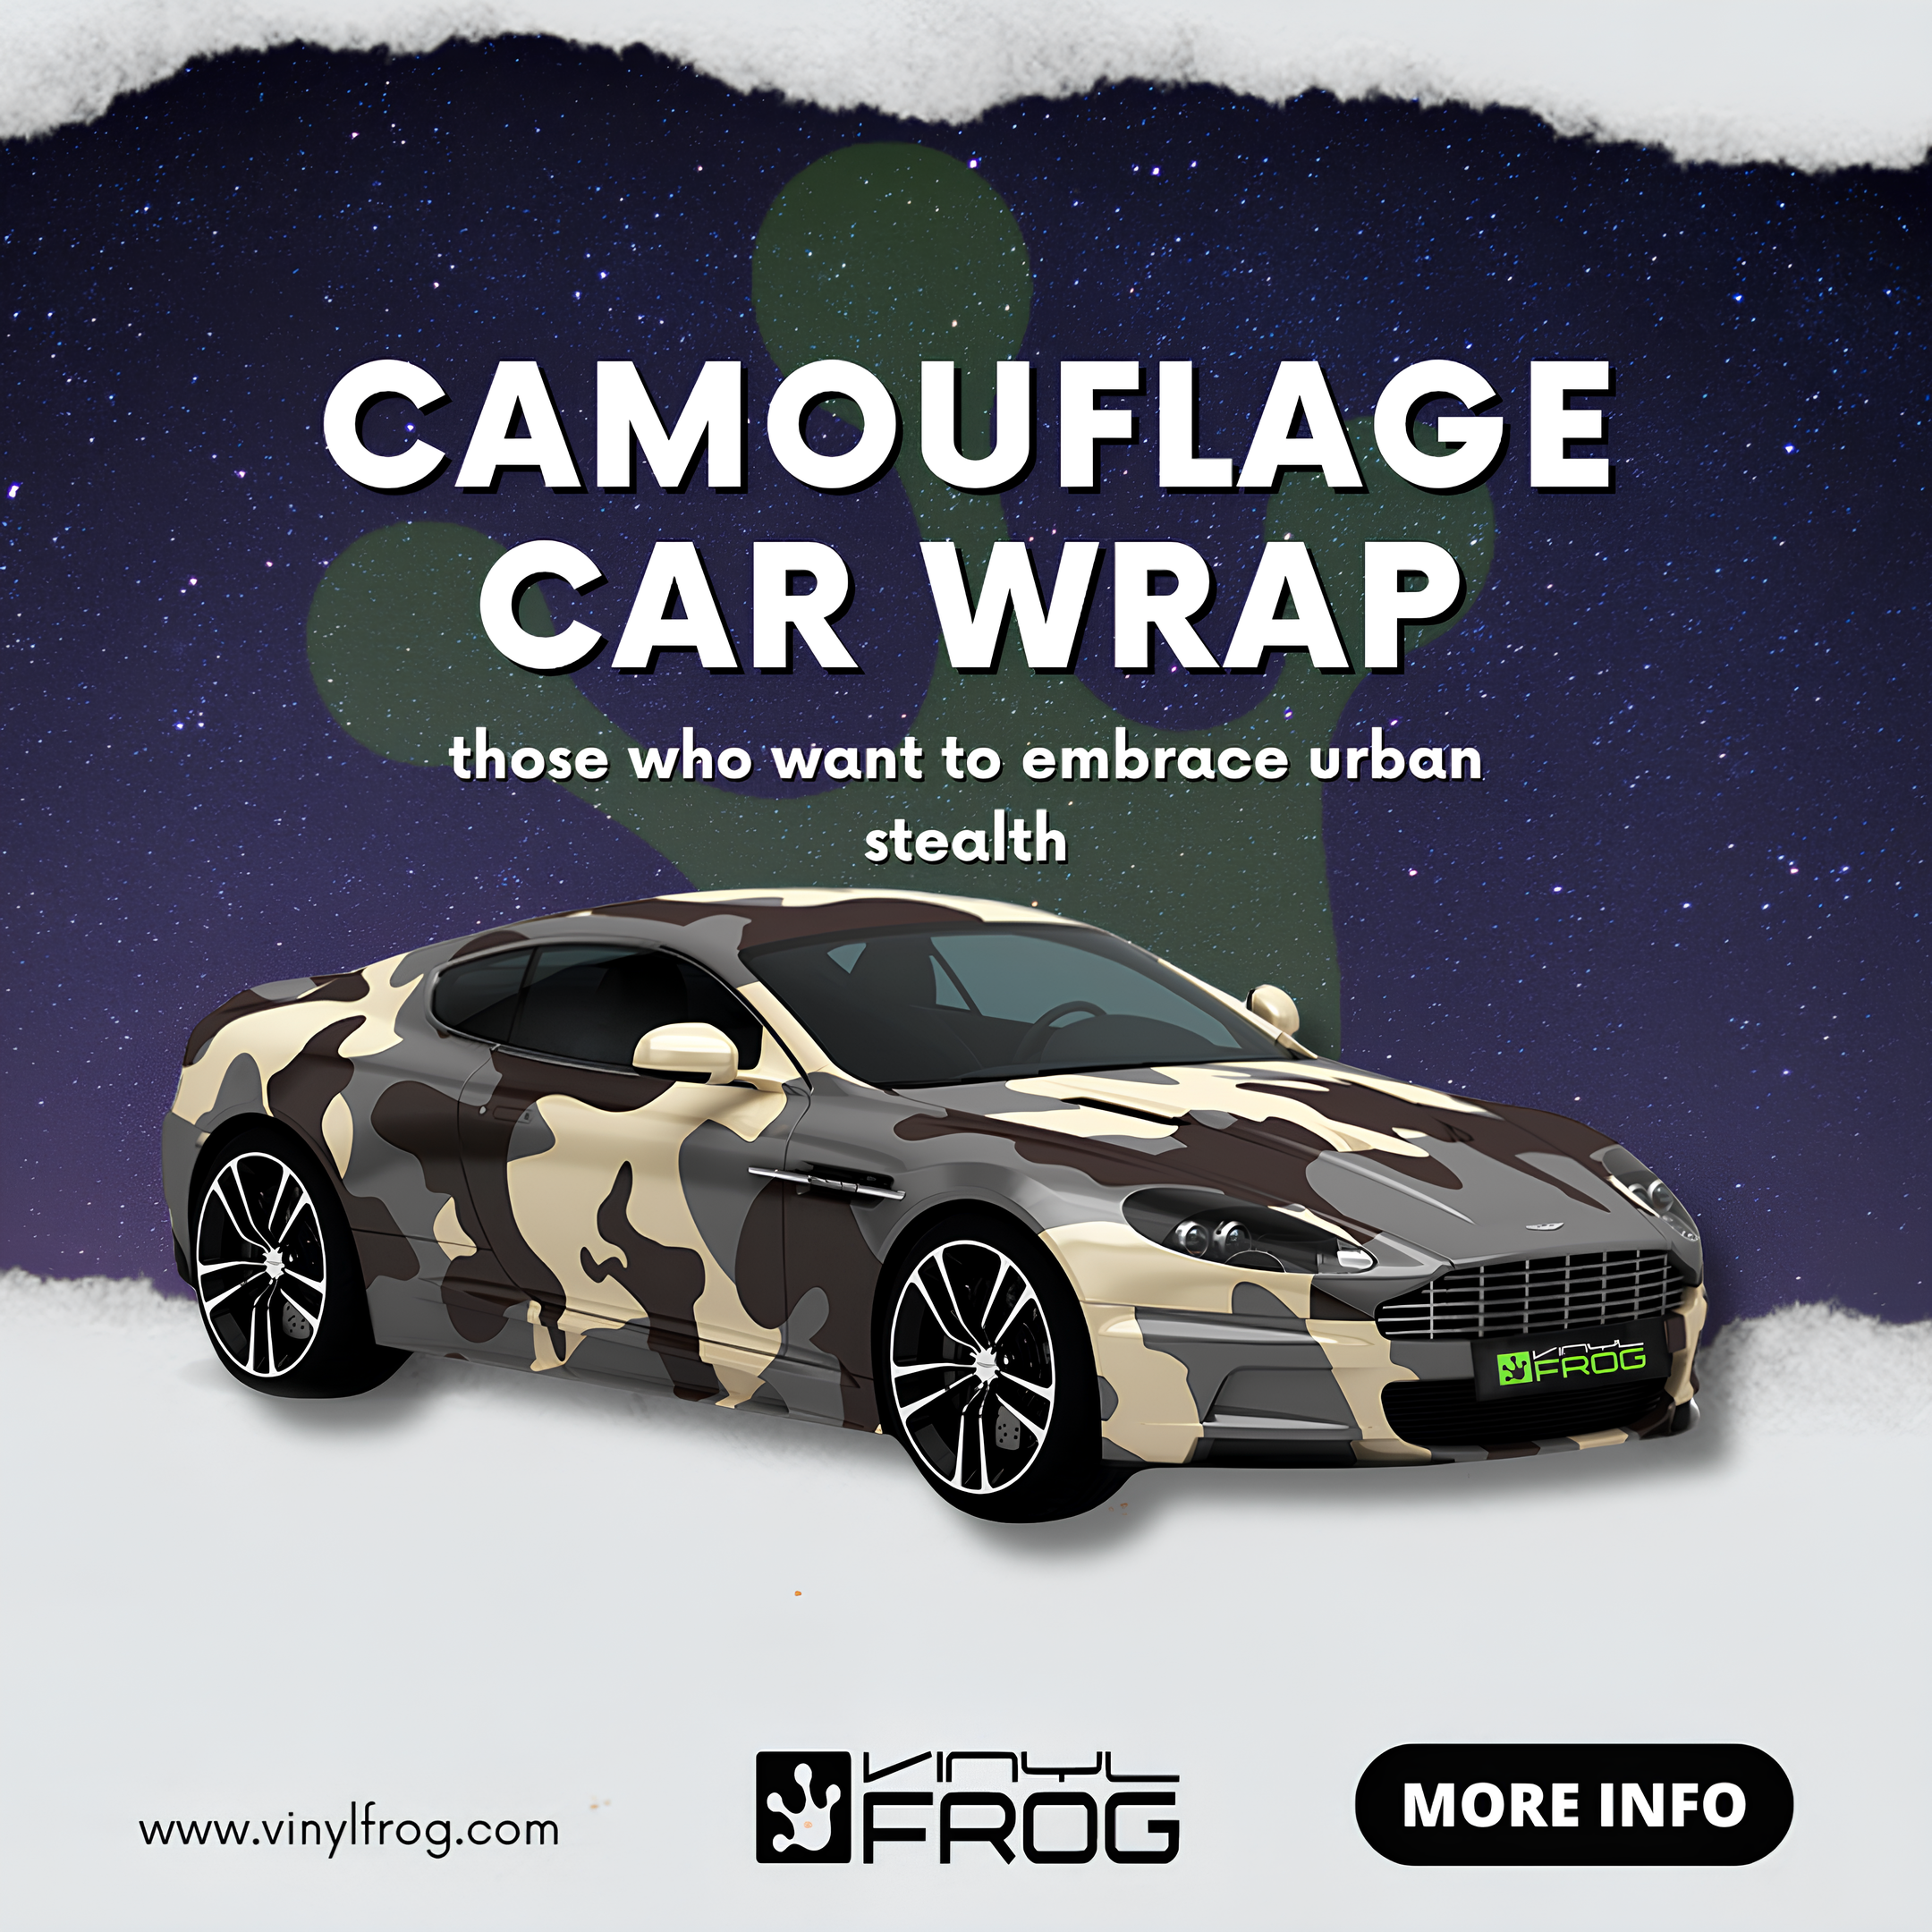 Camouflage Car Wraps